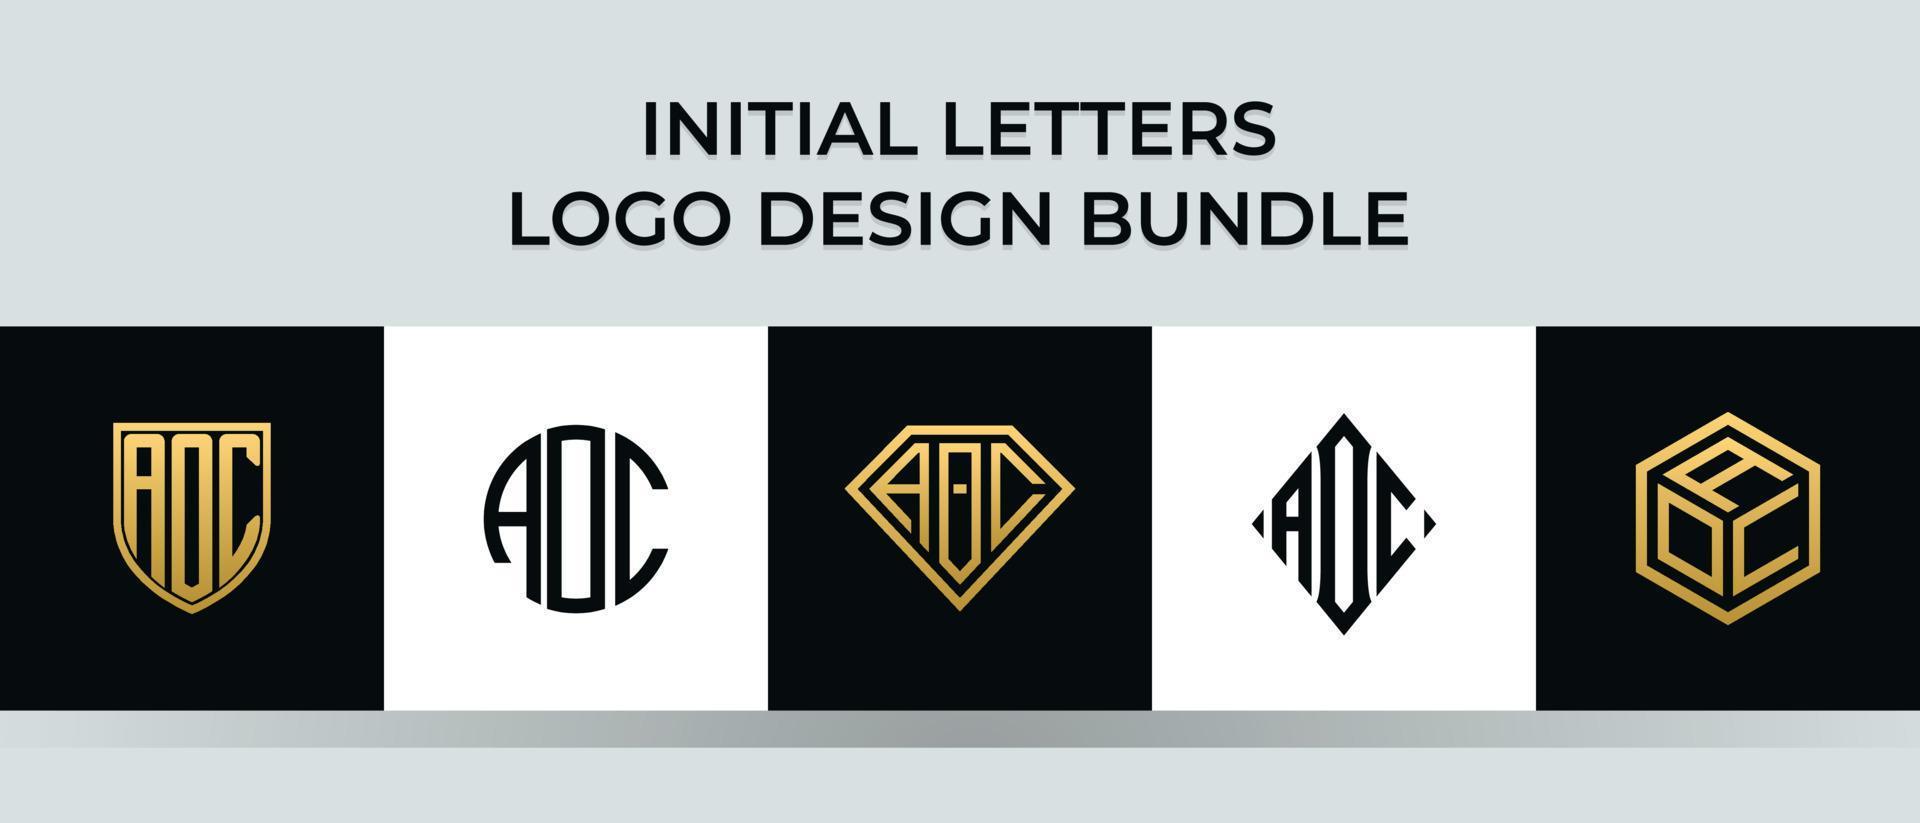 initiala bokstäver aoc logo designs paket vektor